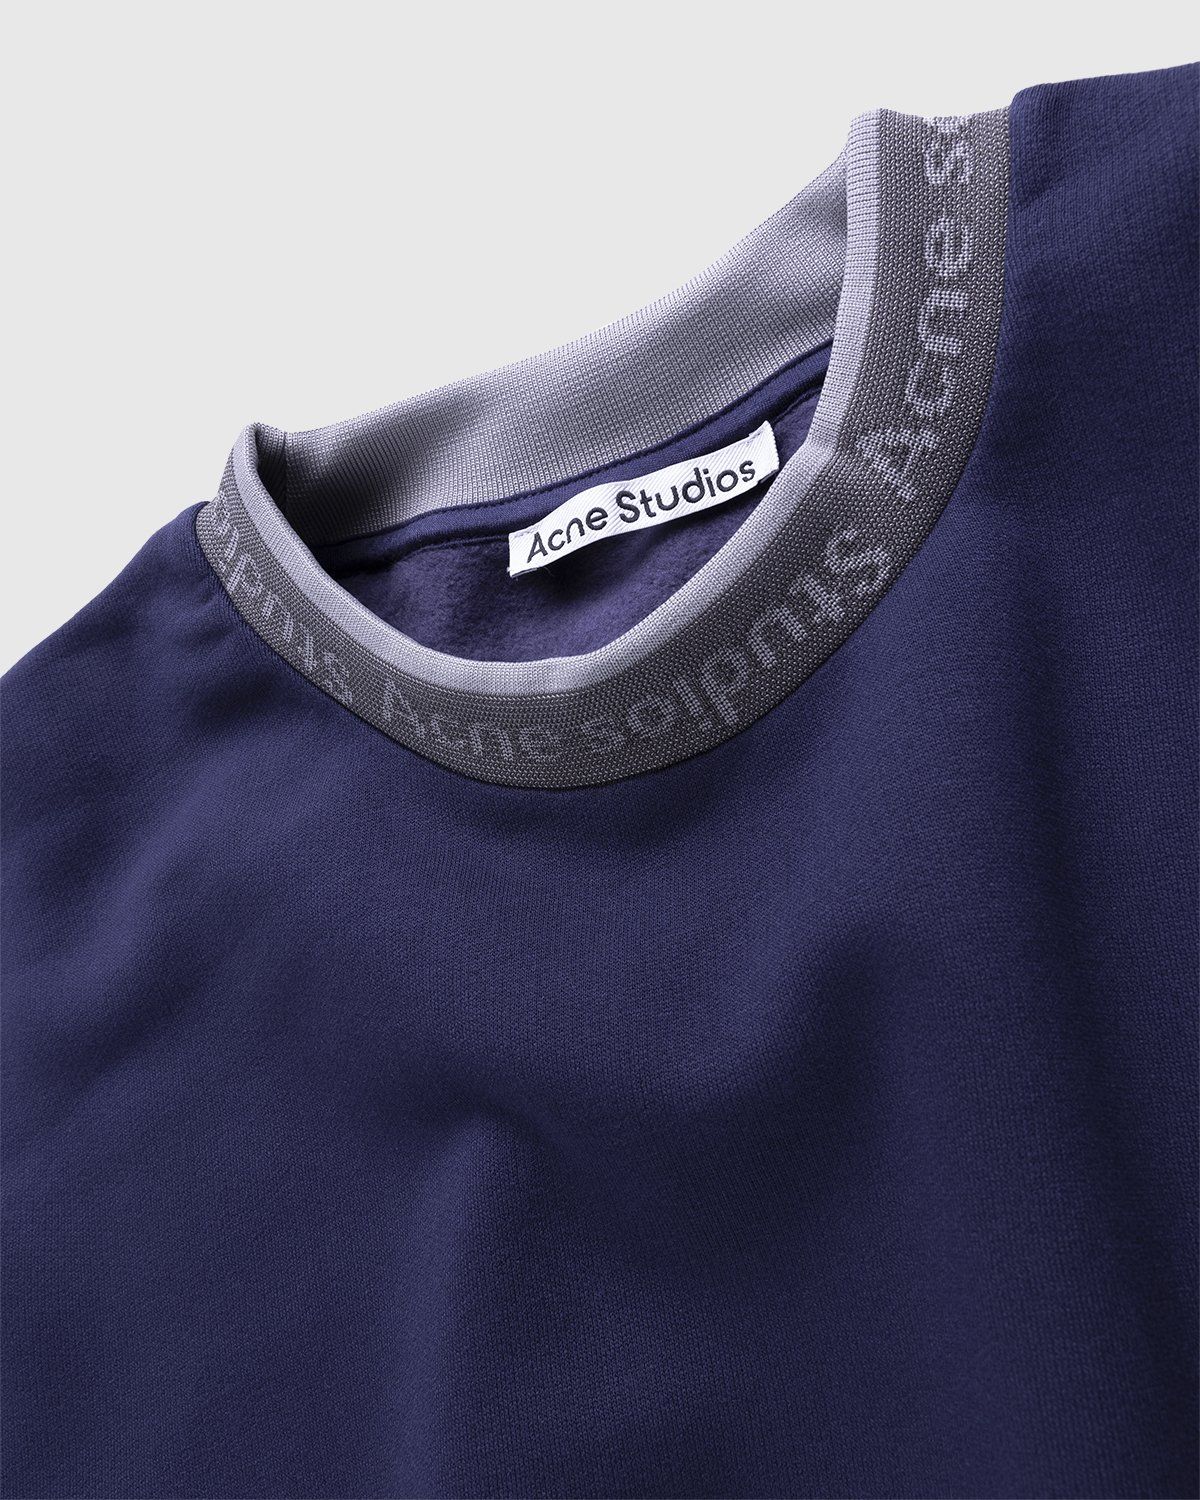 Acne Studios – Logo Rib Sweatshirt Indigo Blue | Highsnobiety Shop